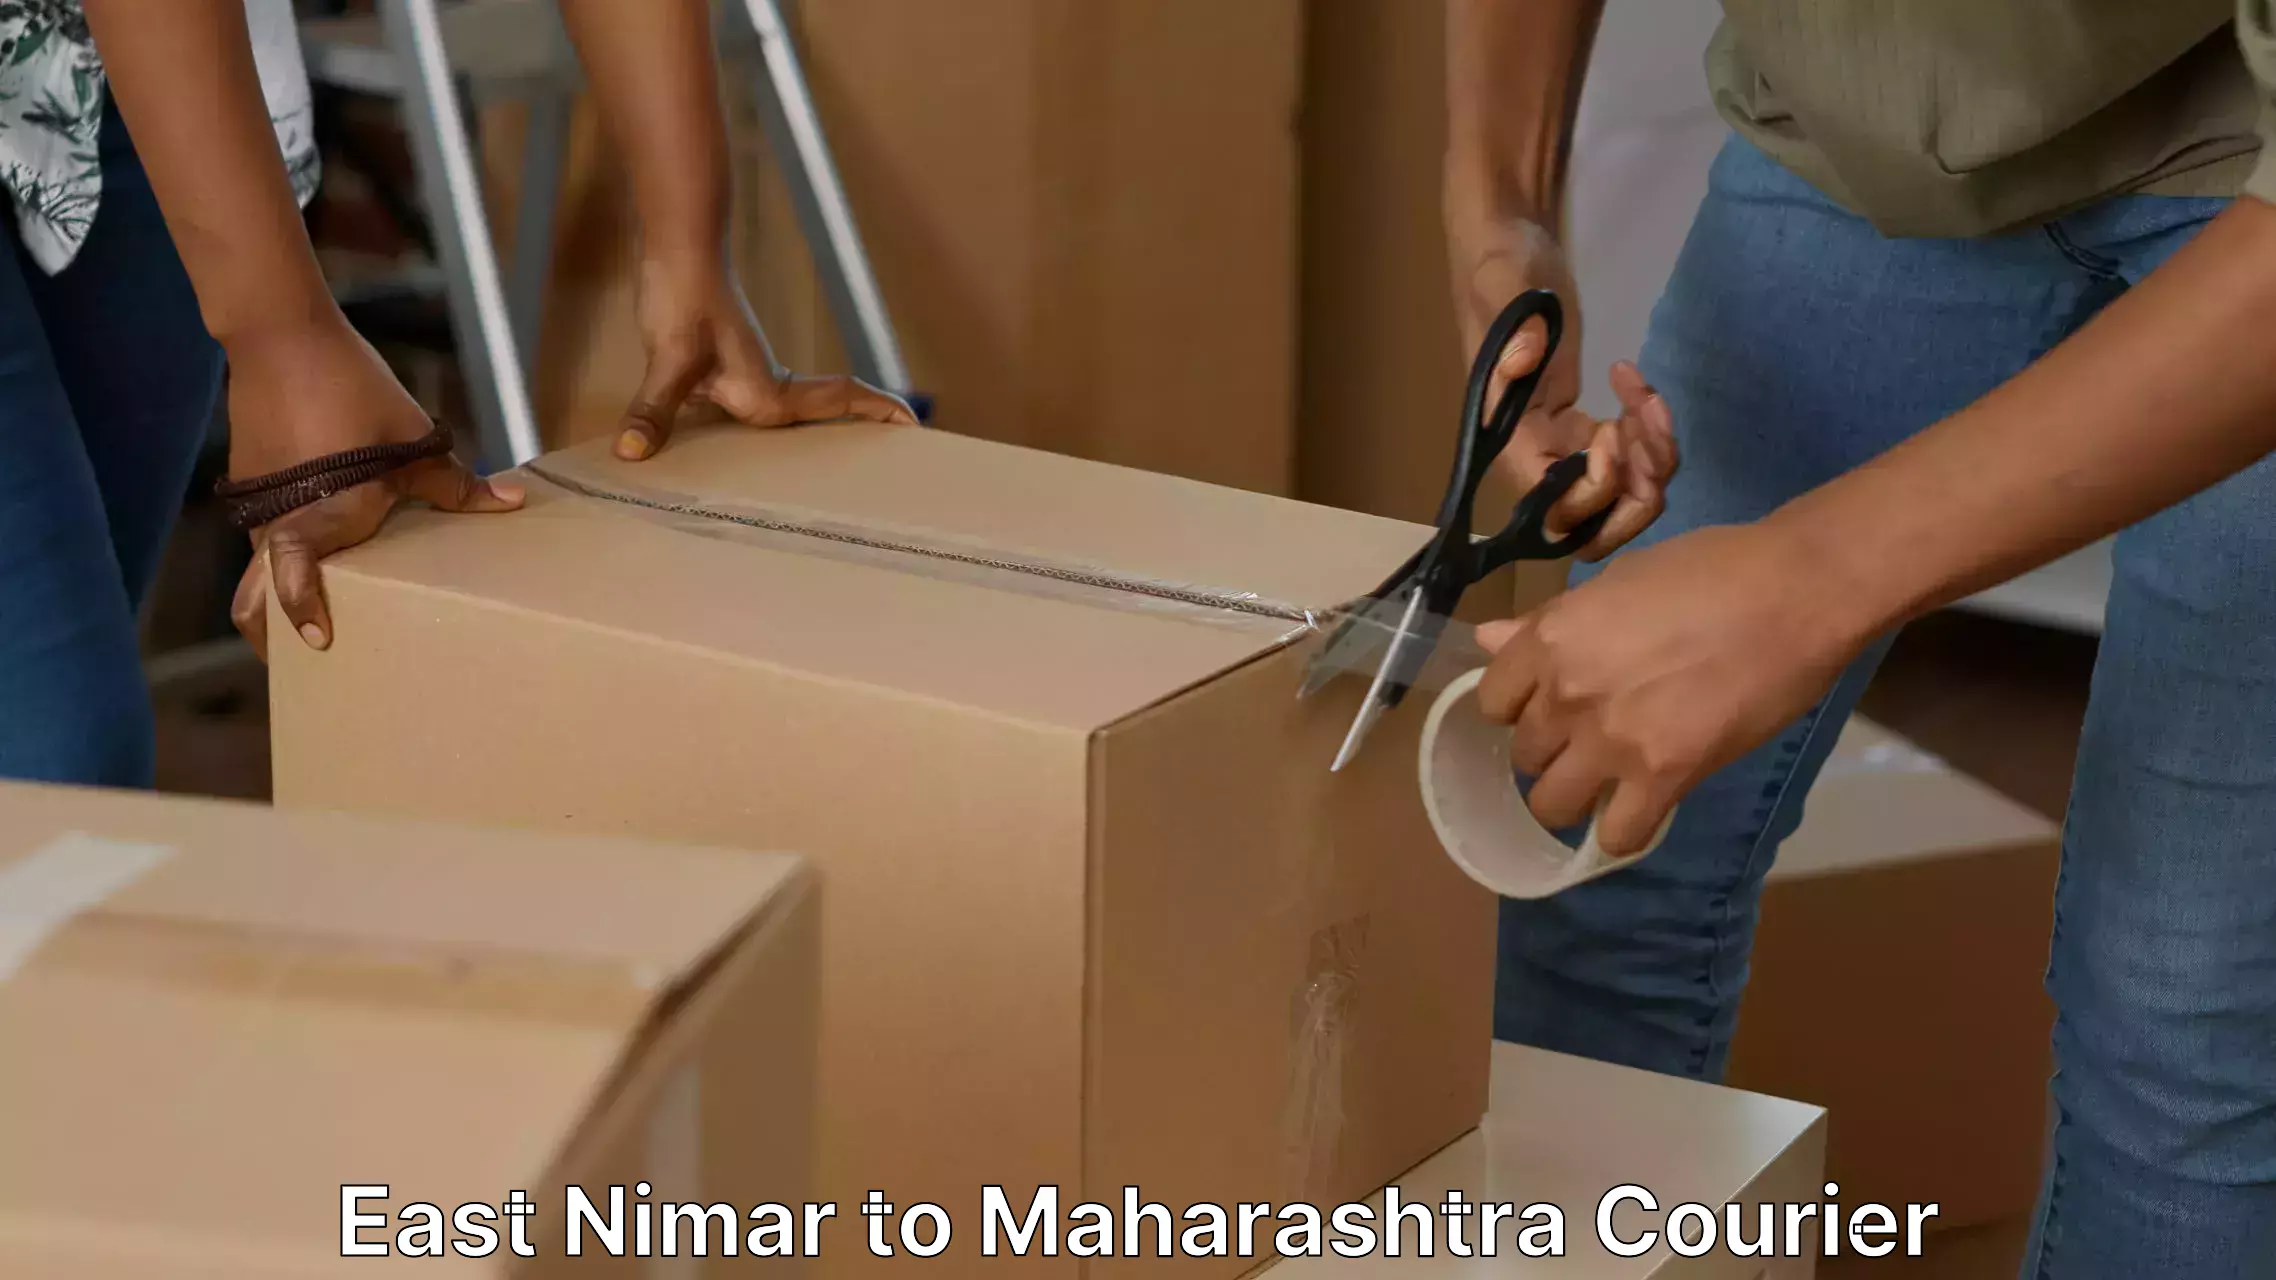 Professional moving company East Nimar to Shirur